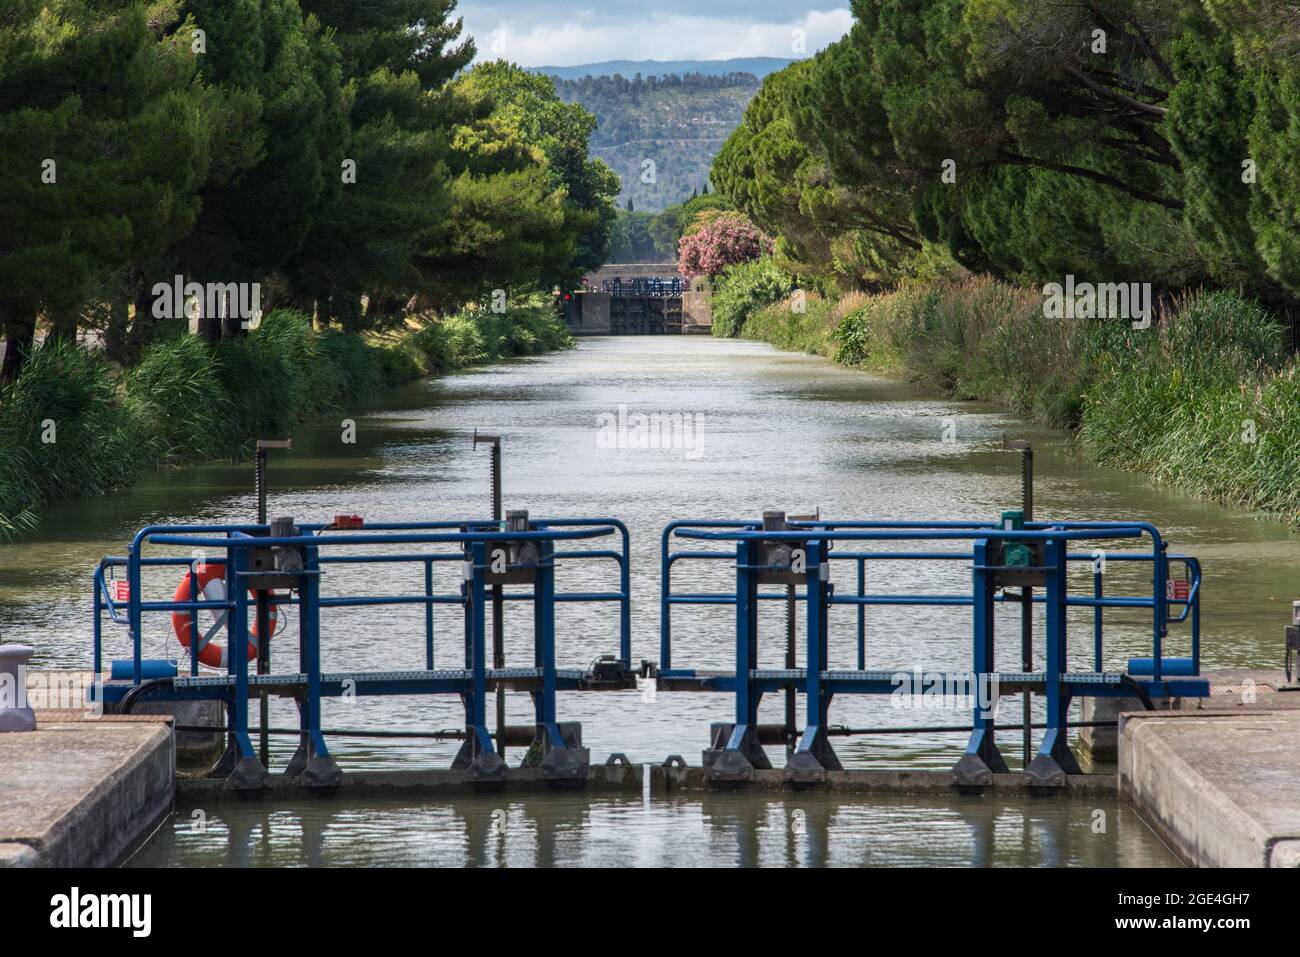 A lock on the Canal de Jonction near Salleles d'Aude. Stock Photo